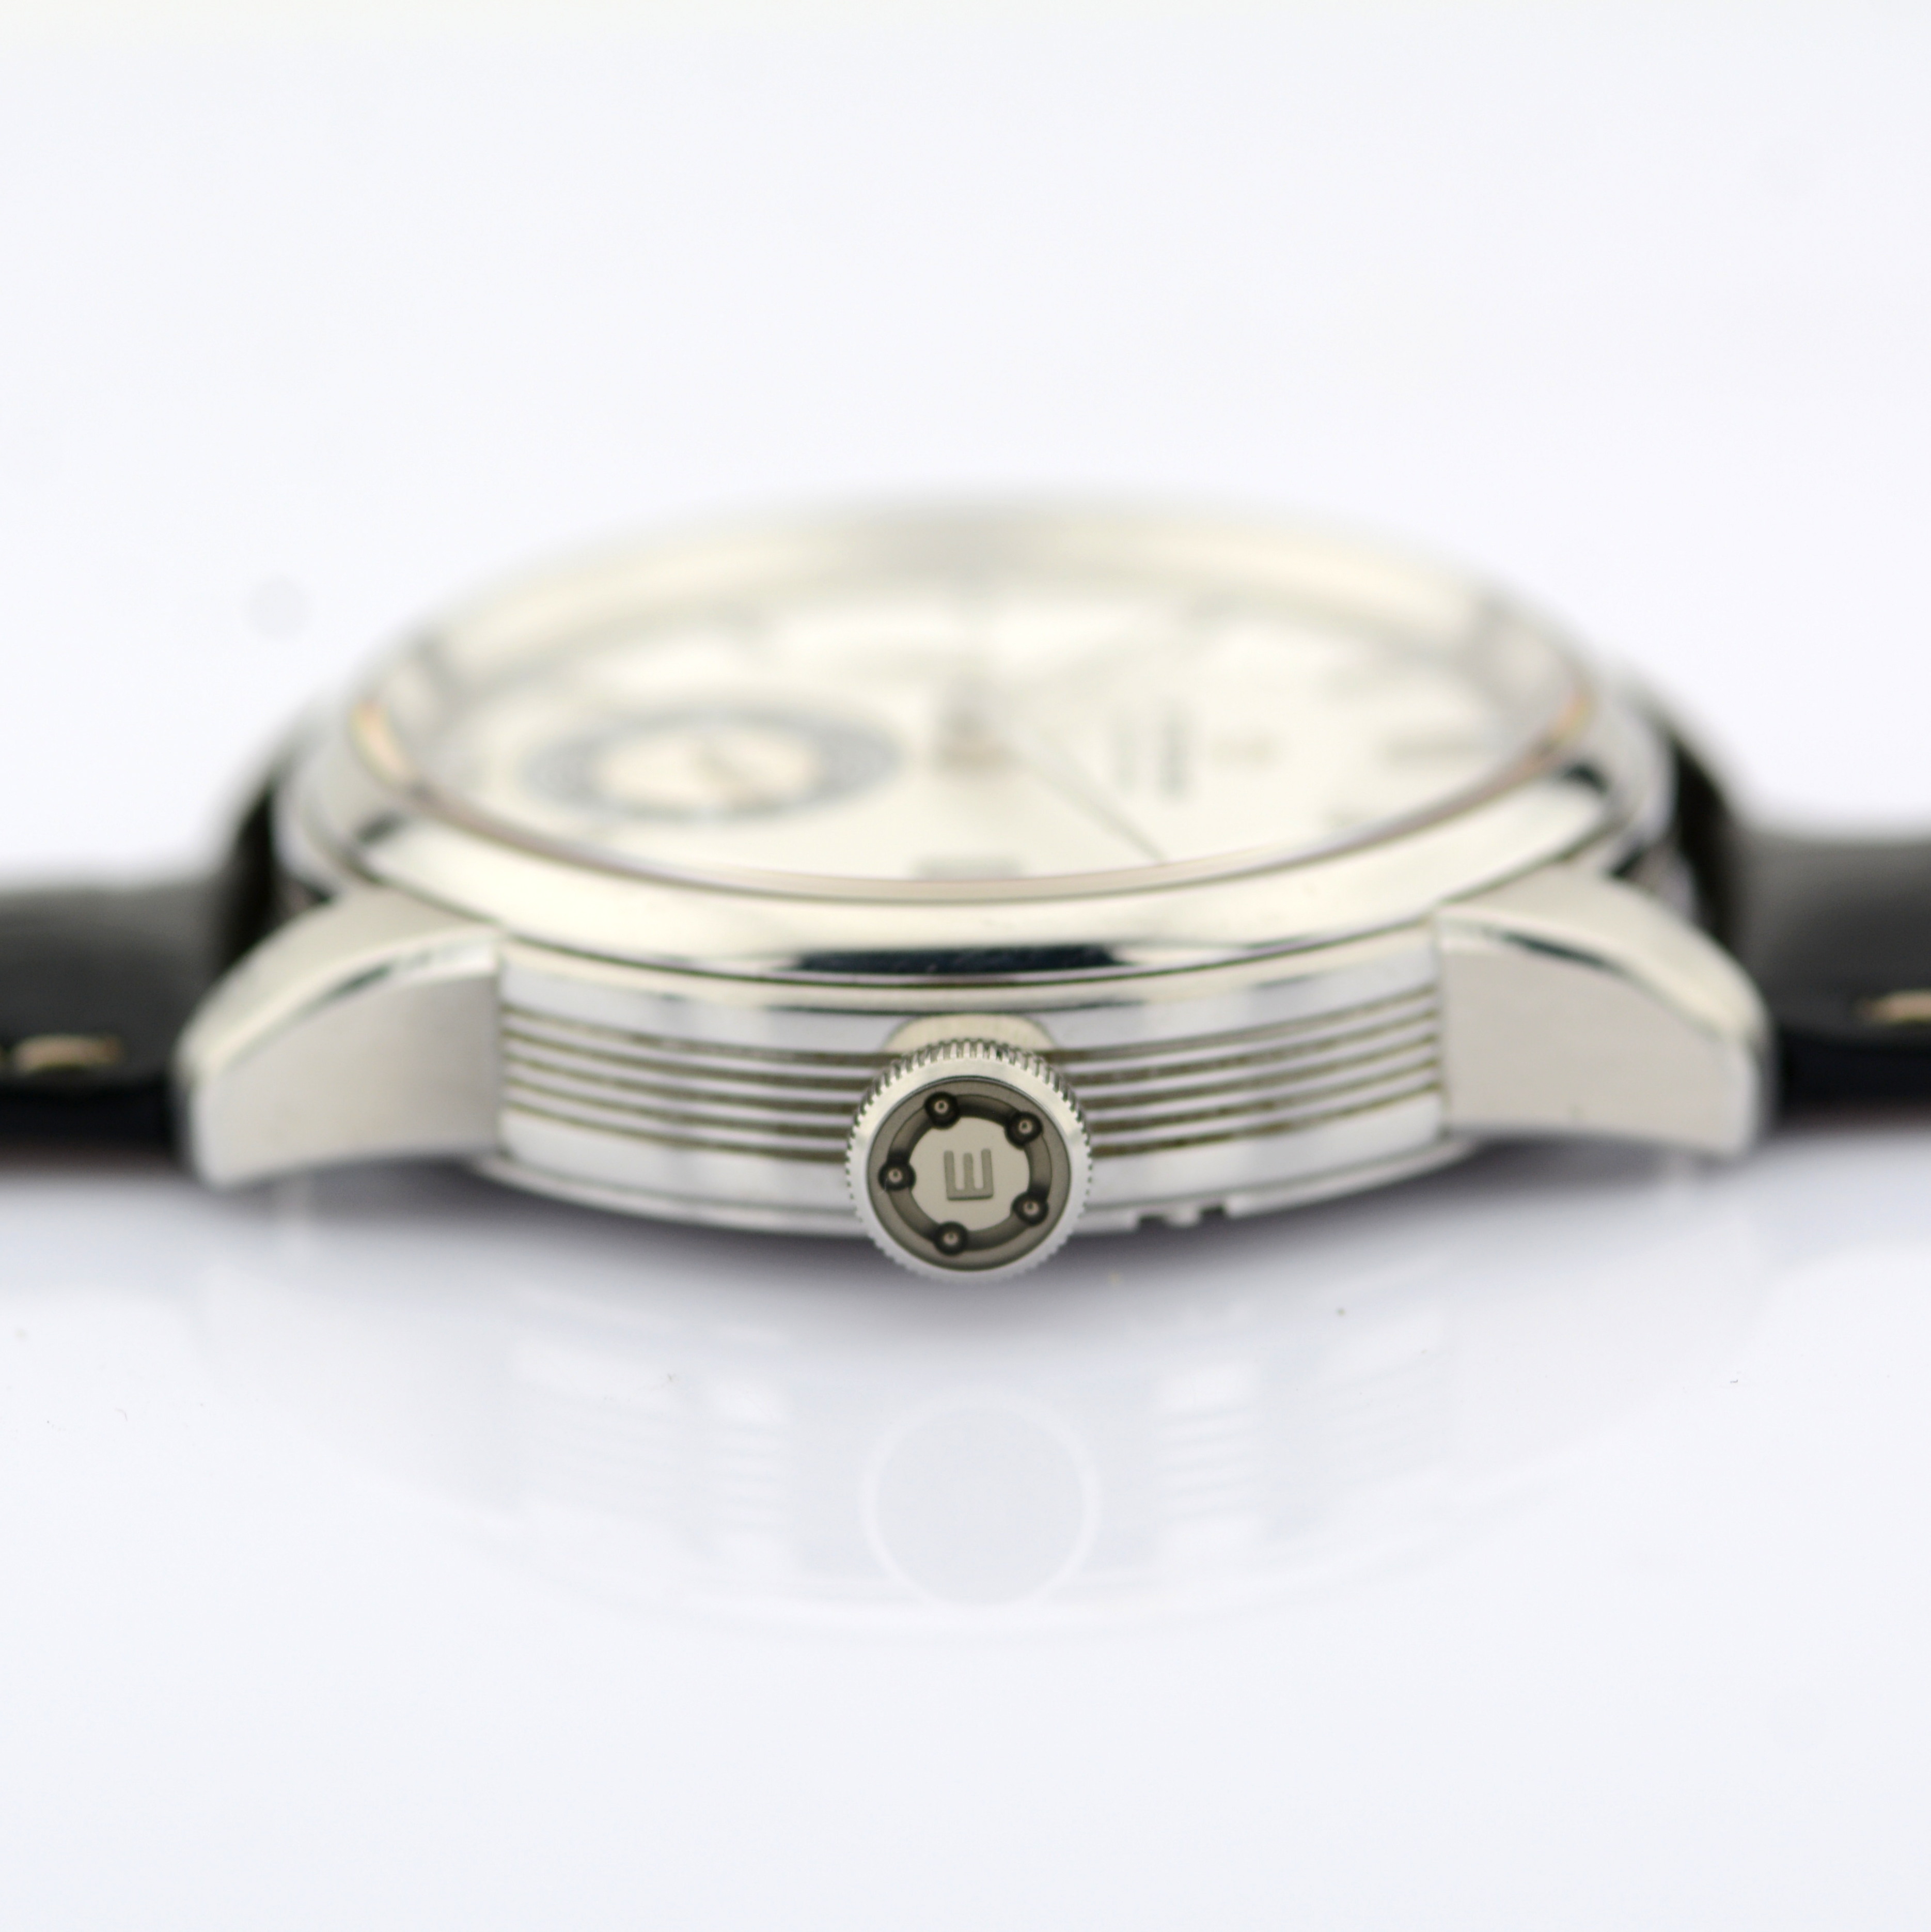 Eterna / Adventic GMT Manufacture Automatic Date - Gentlmen's Steel Wrist Watch - Image 9 of 10